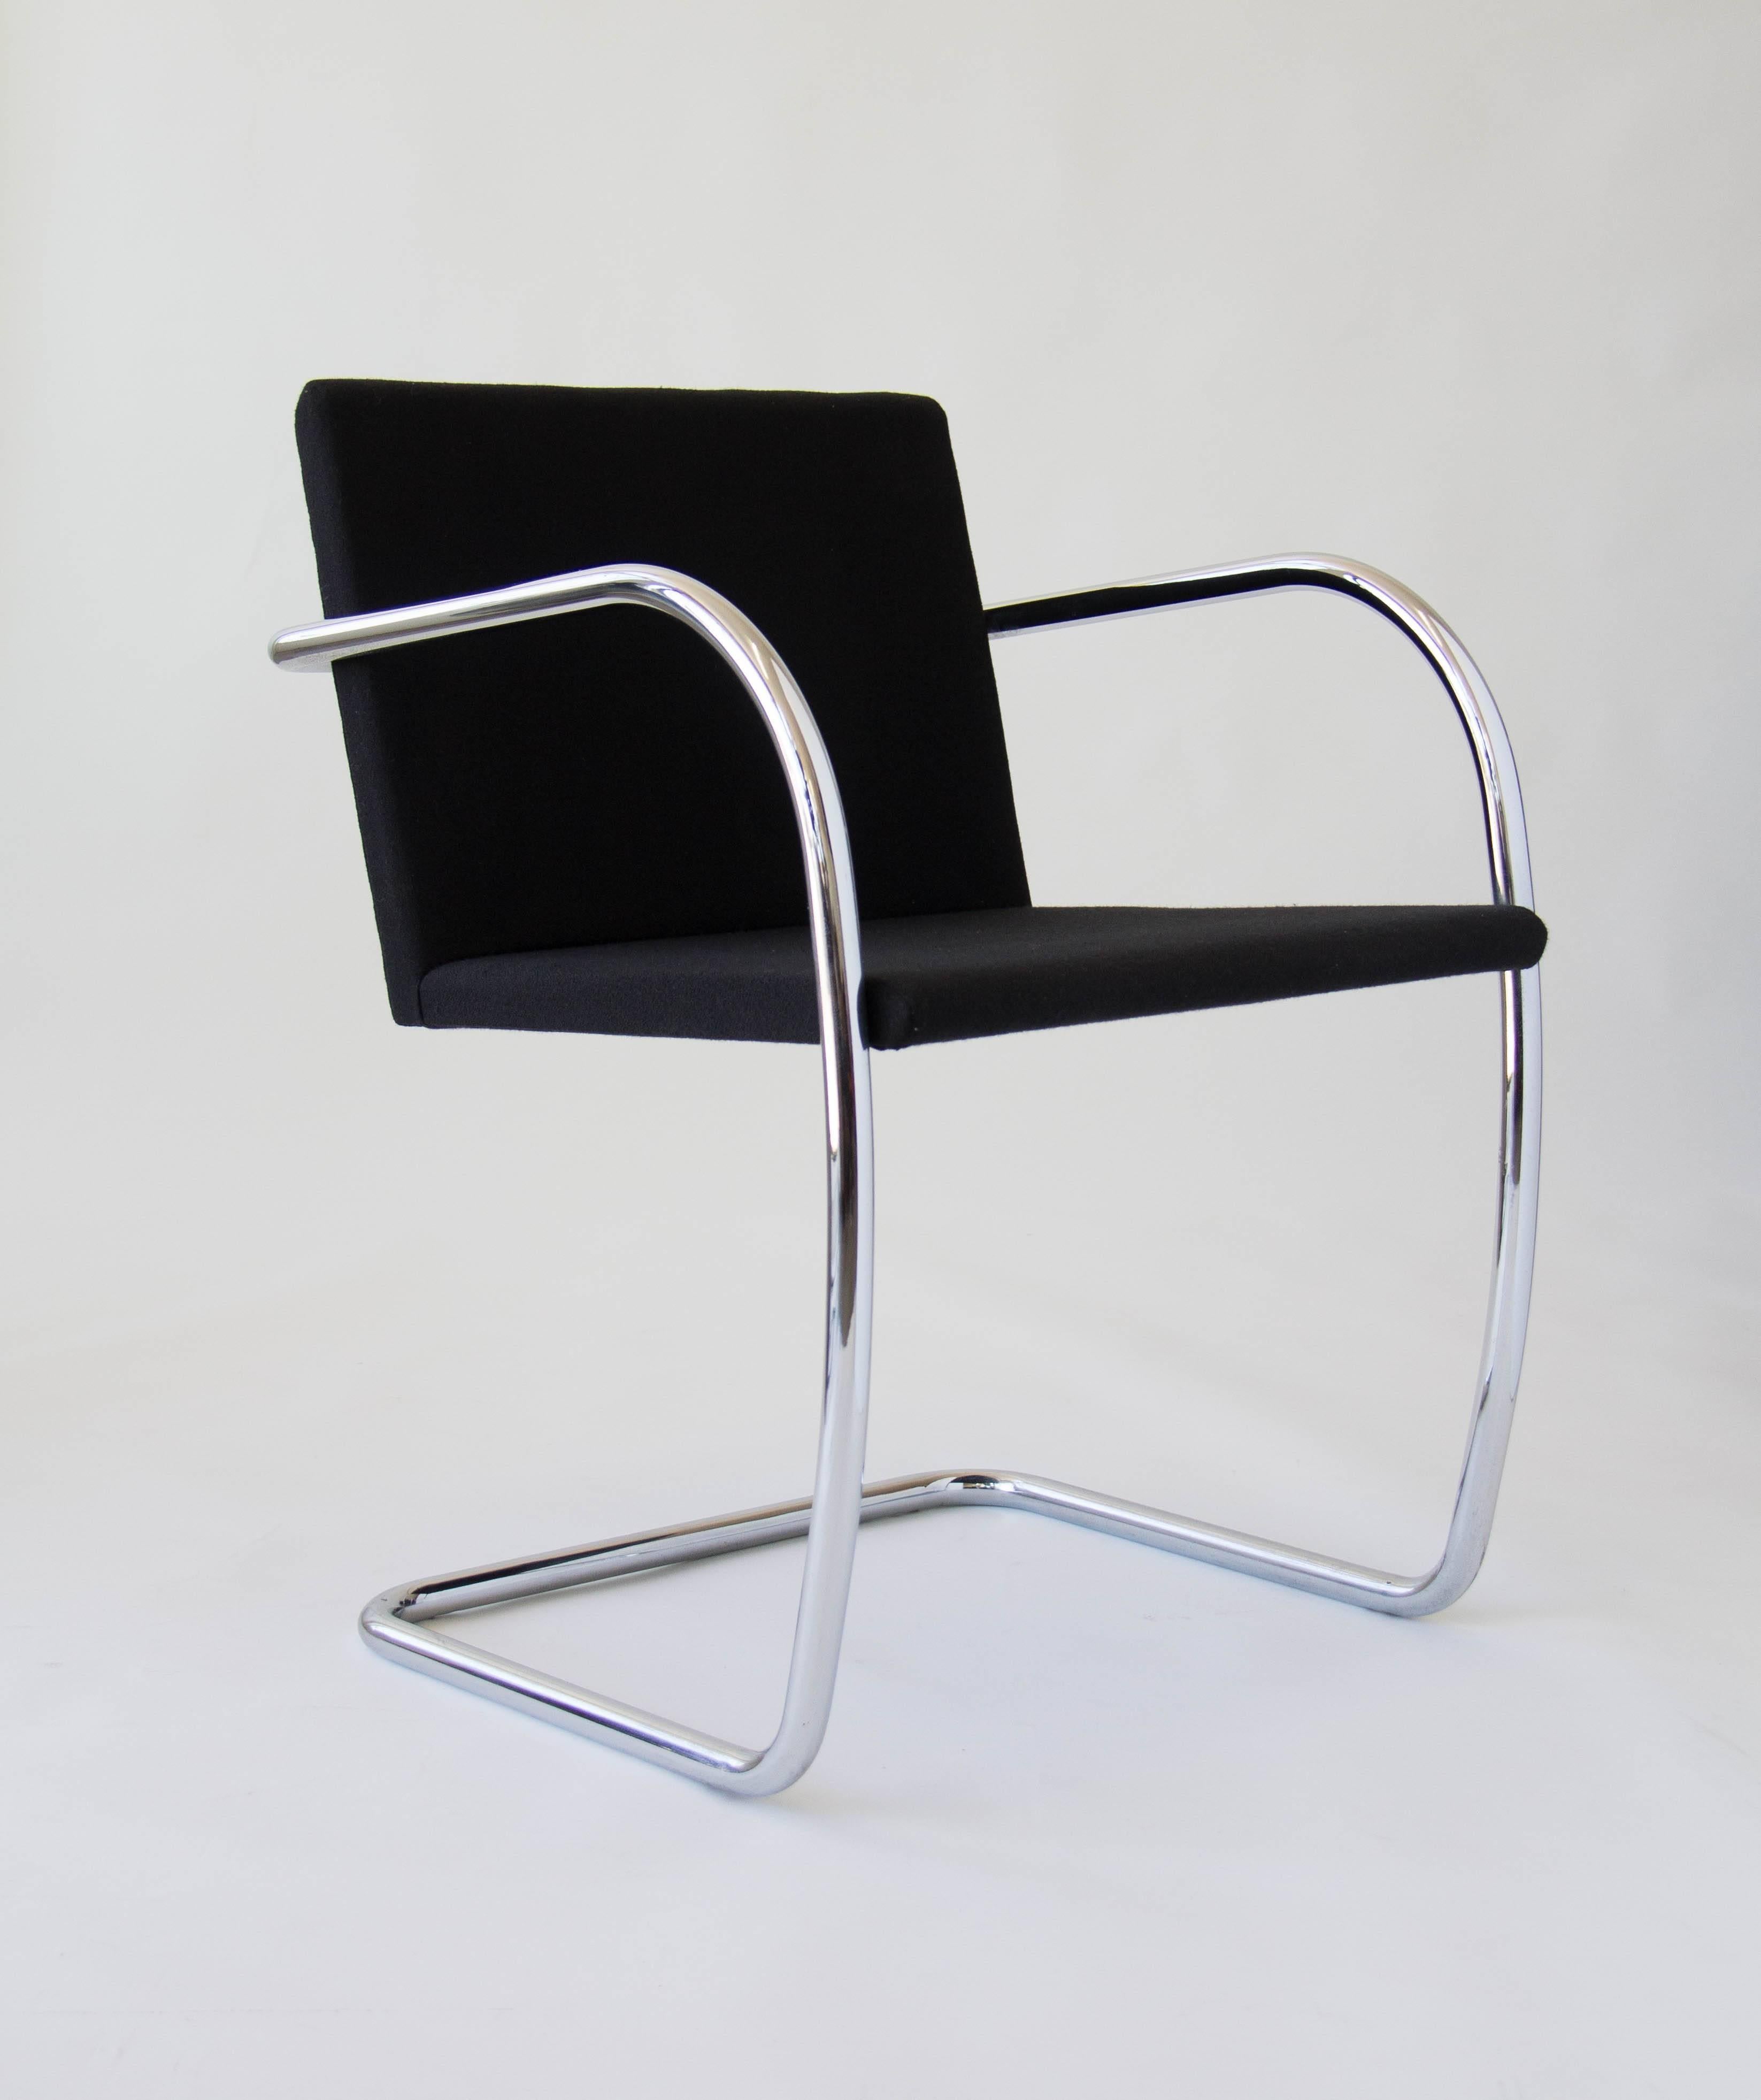 European Tubular Brno Chairs by Mies van der Rohe for Knoll International